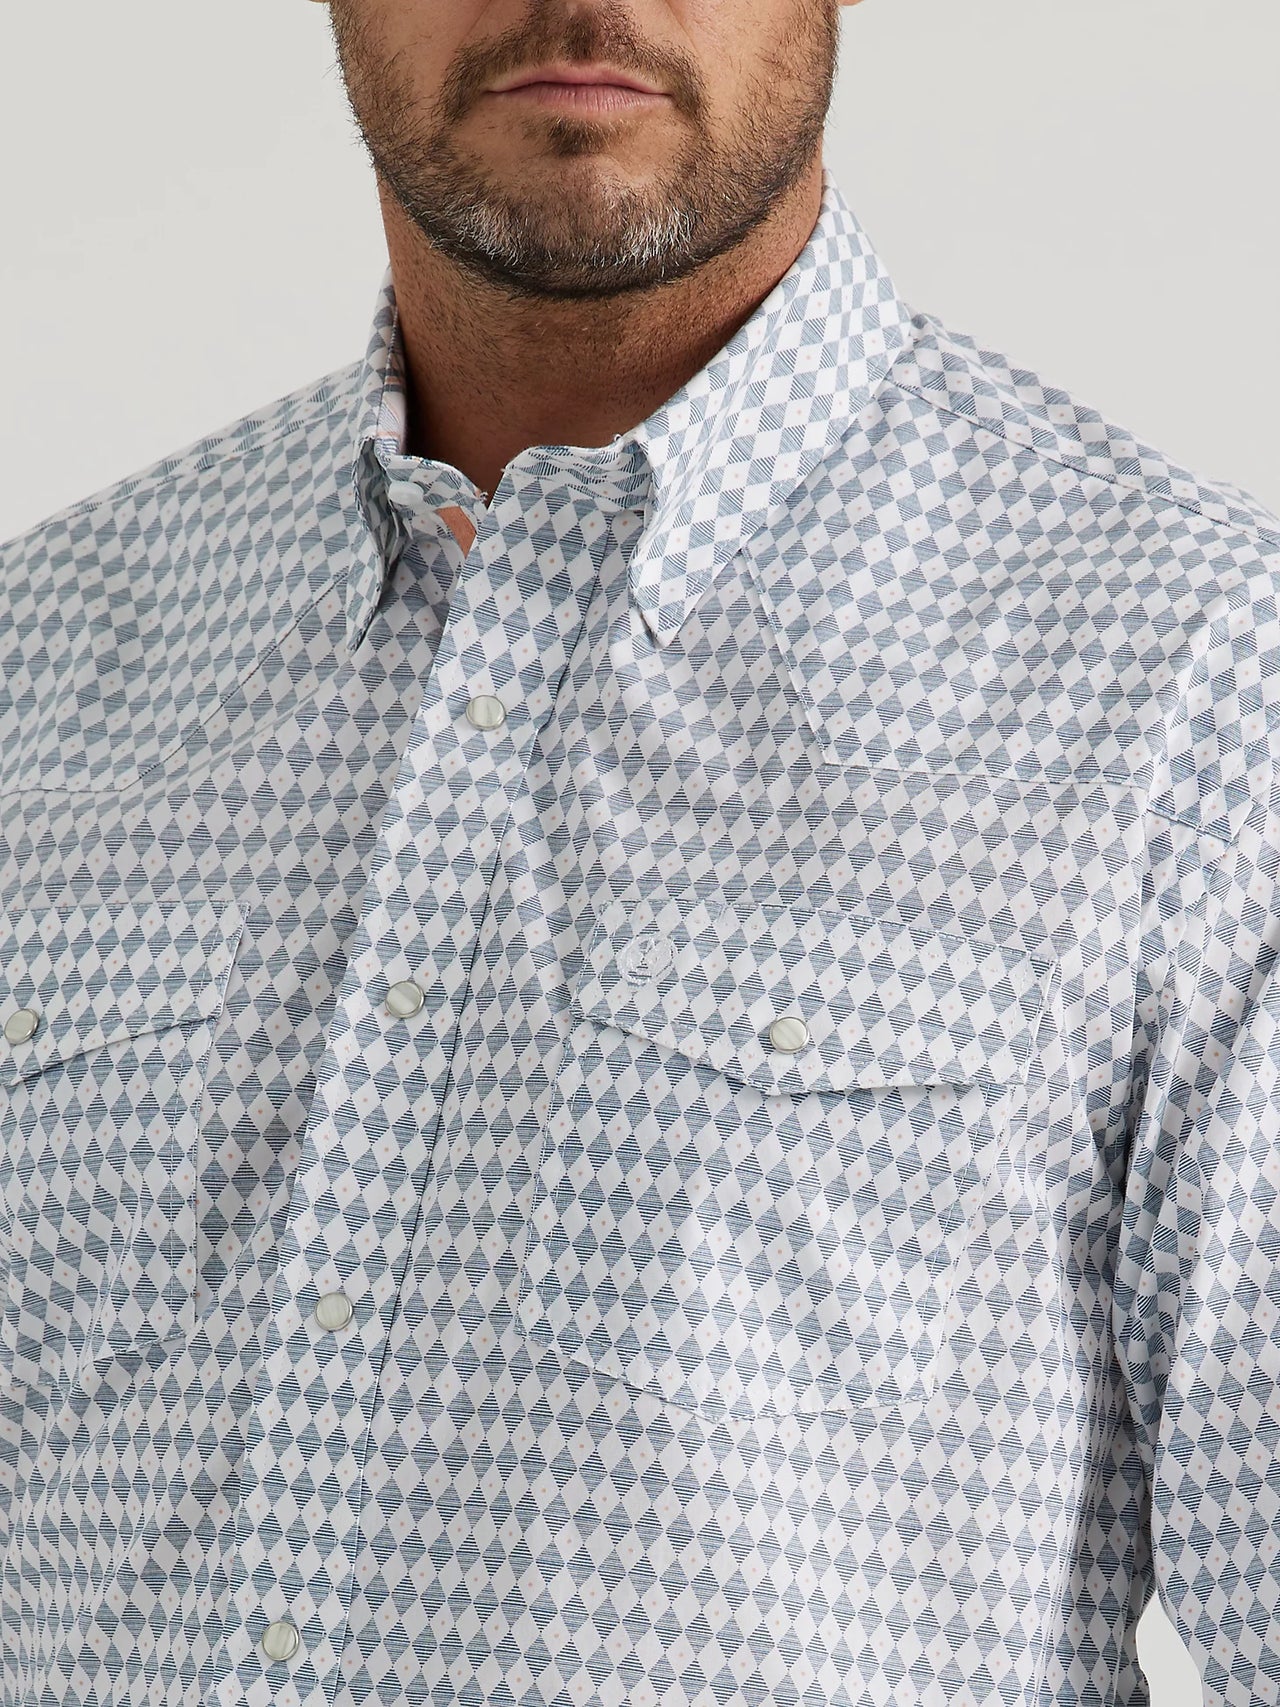 Wrangler George Strait Troubadour LS Western Snap Shirt - Diamond Checker